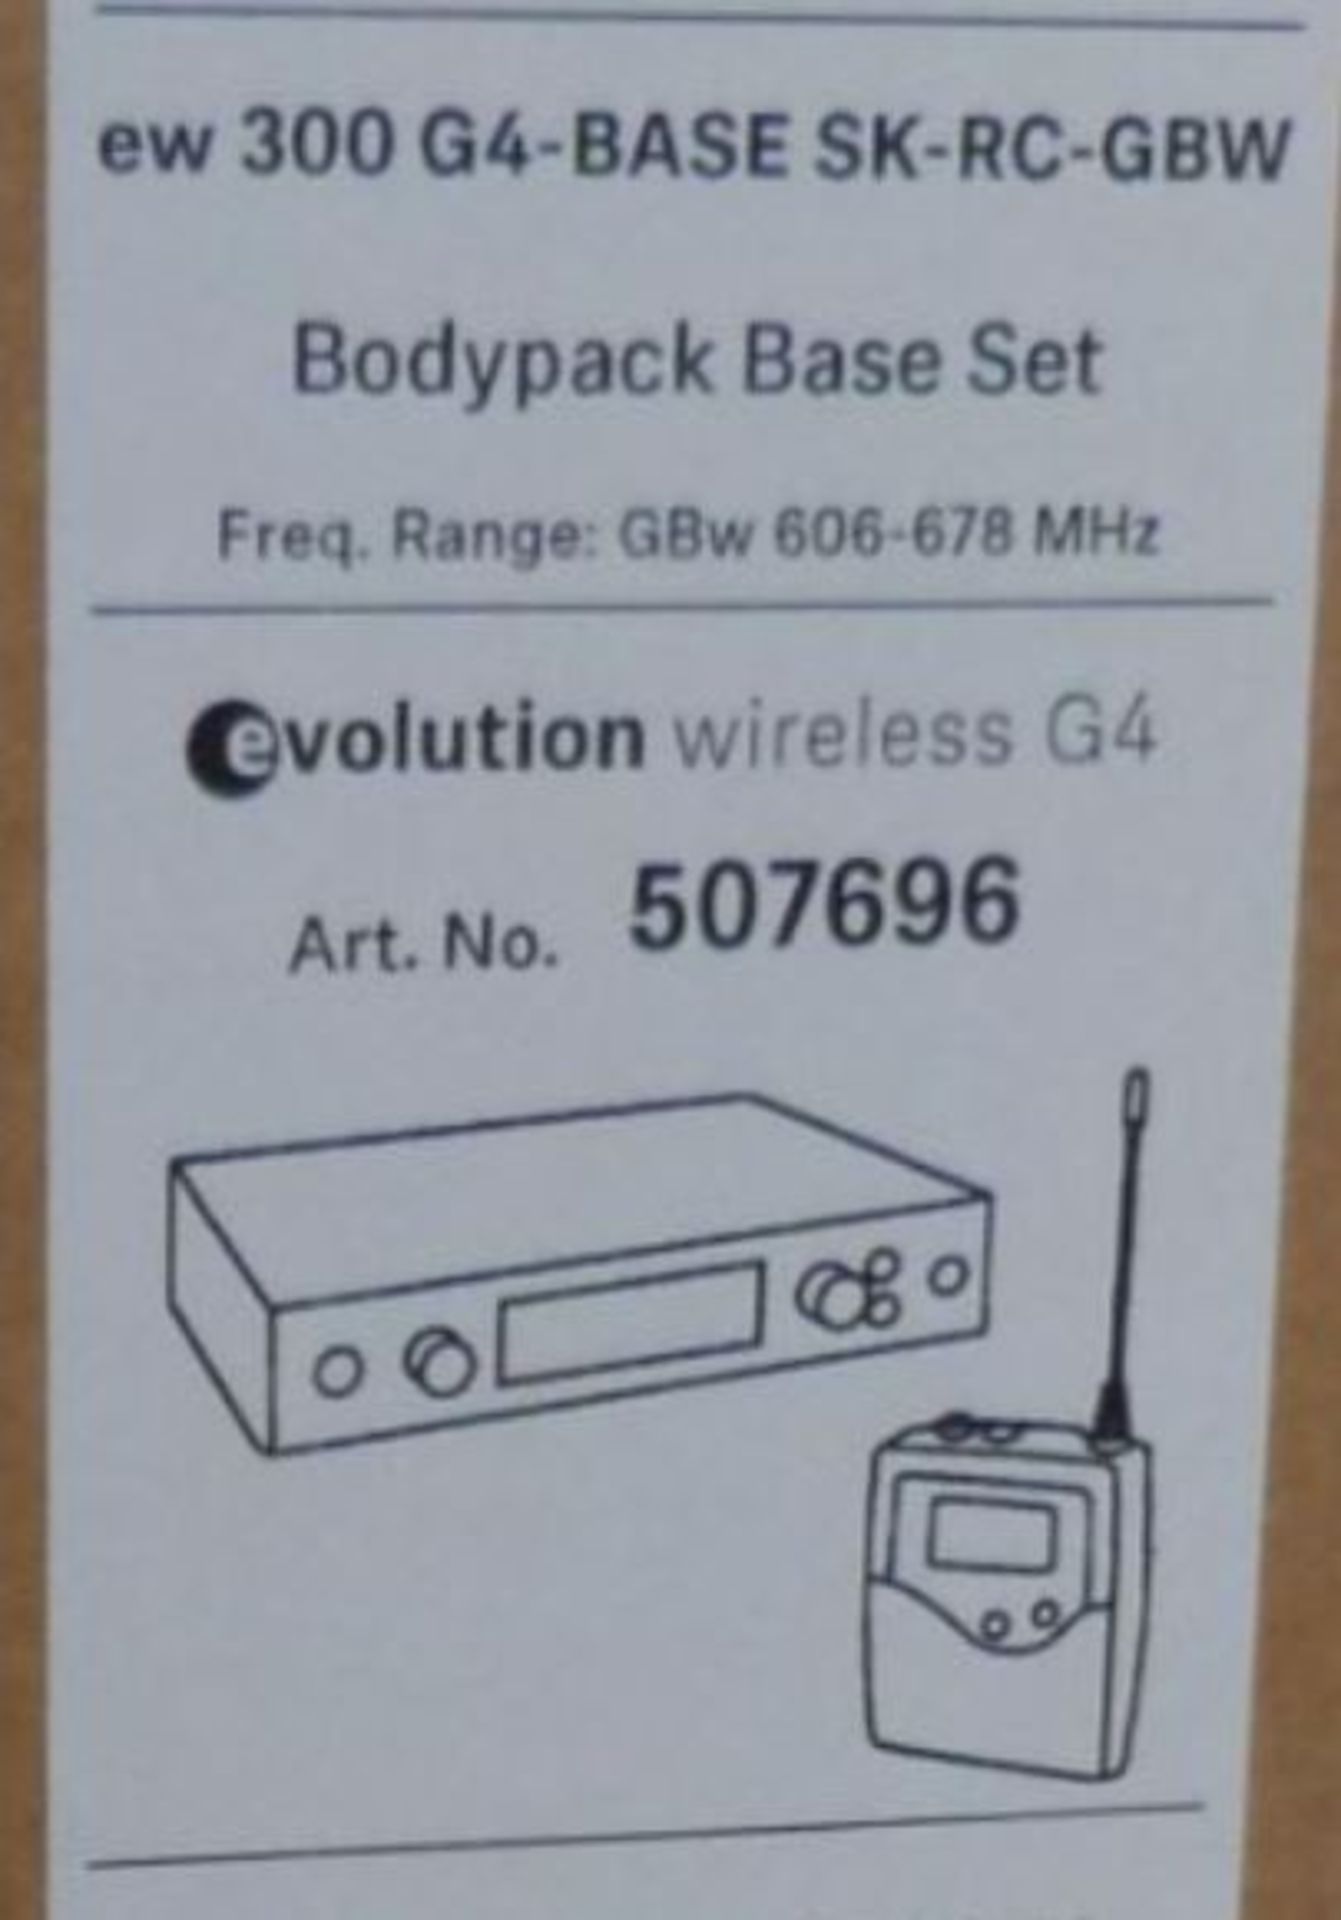 Sennheiser EW 300 G4-BASE SK-RC-GBW Bodypack Base Set 507696. In Cardboard. Serial No: 8248661875